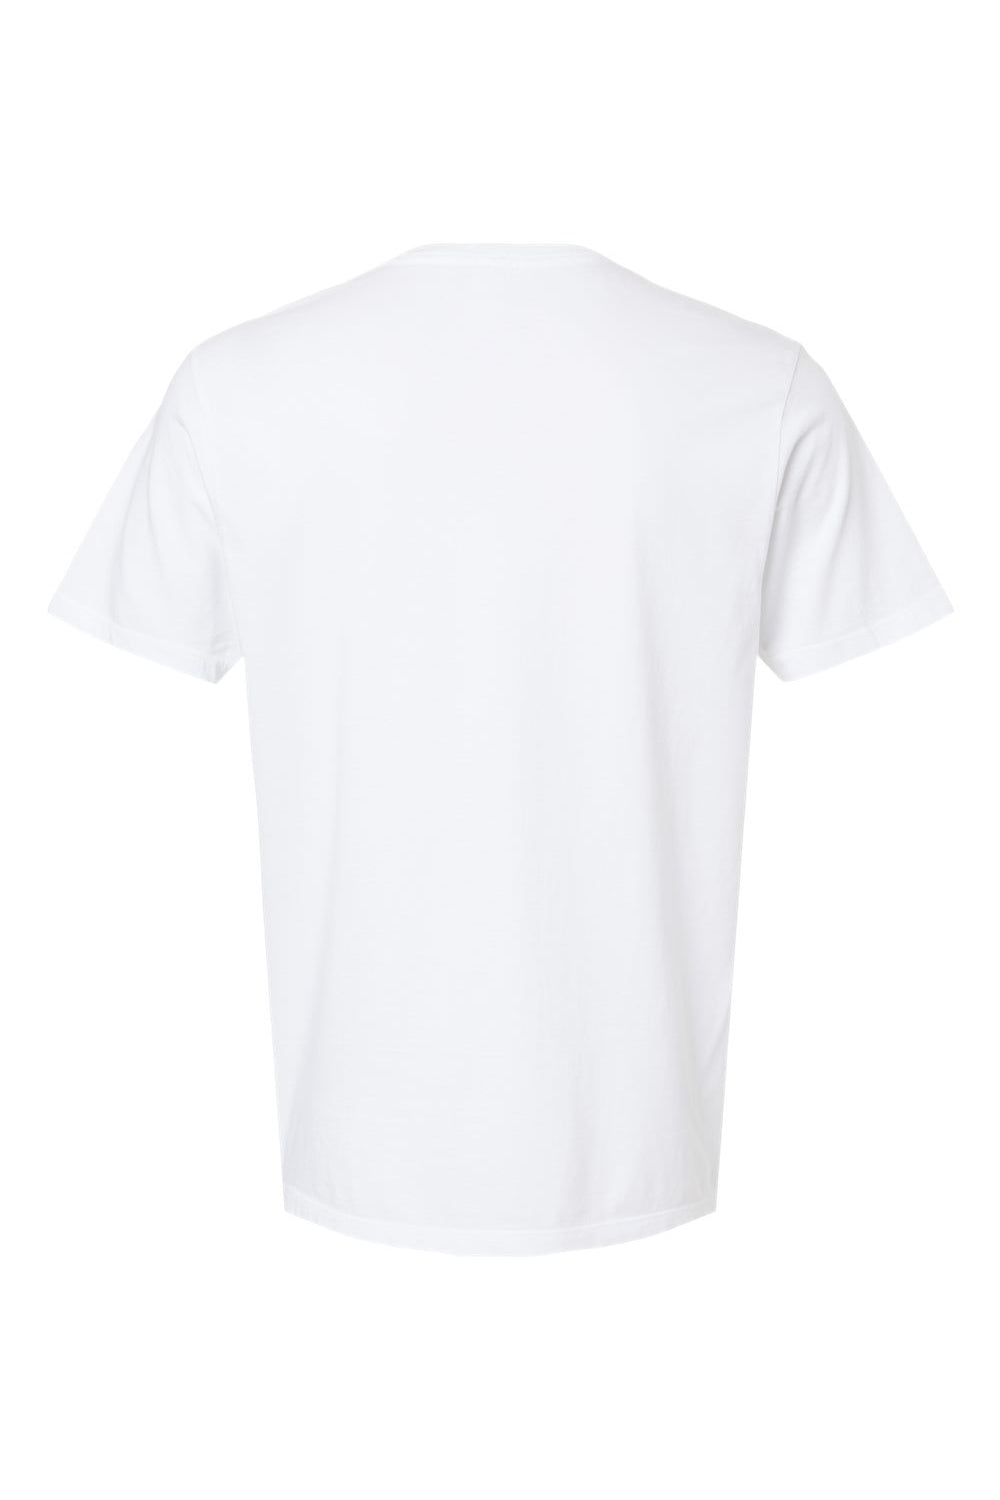 SoftShirts 400 Mens Organic Short Sleeve Crewneck T-Shirt White Flat Back